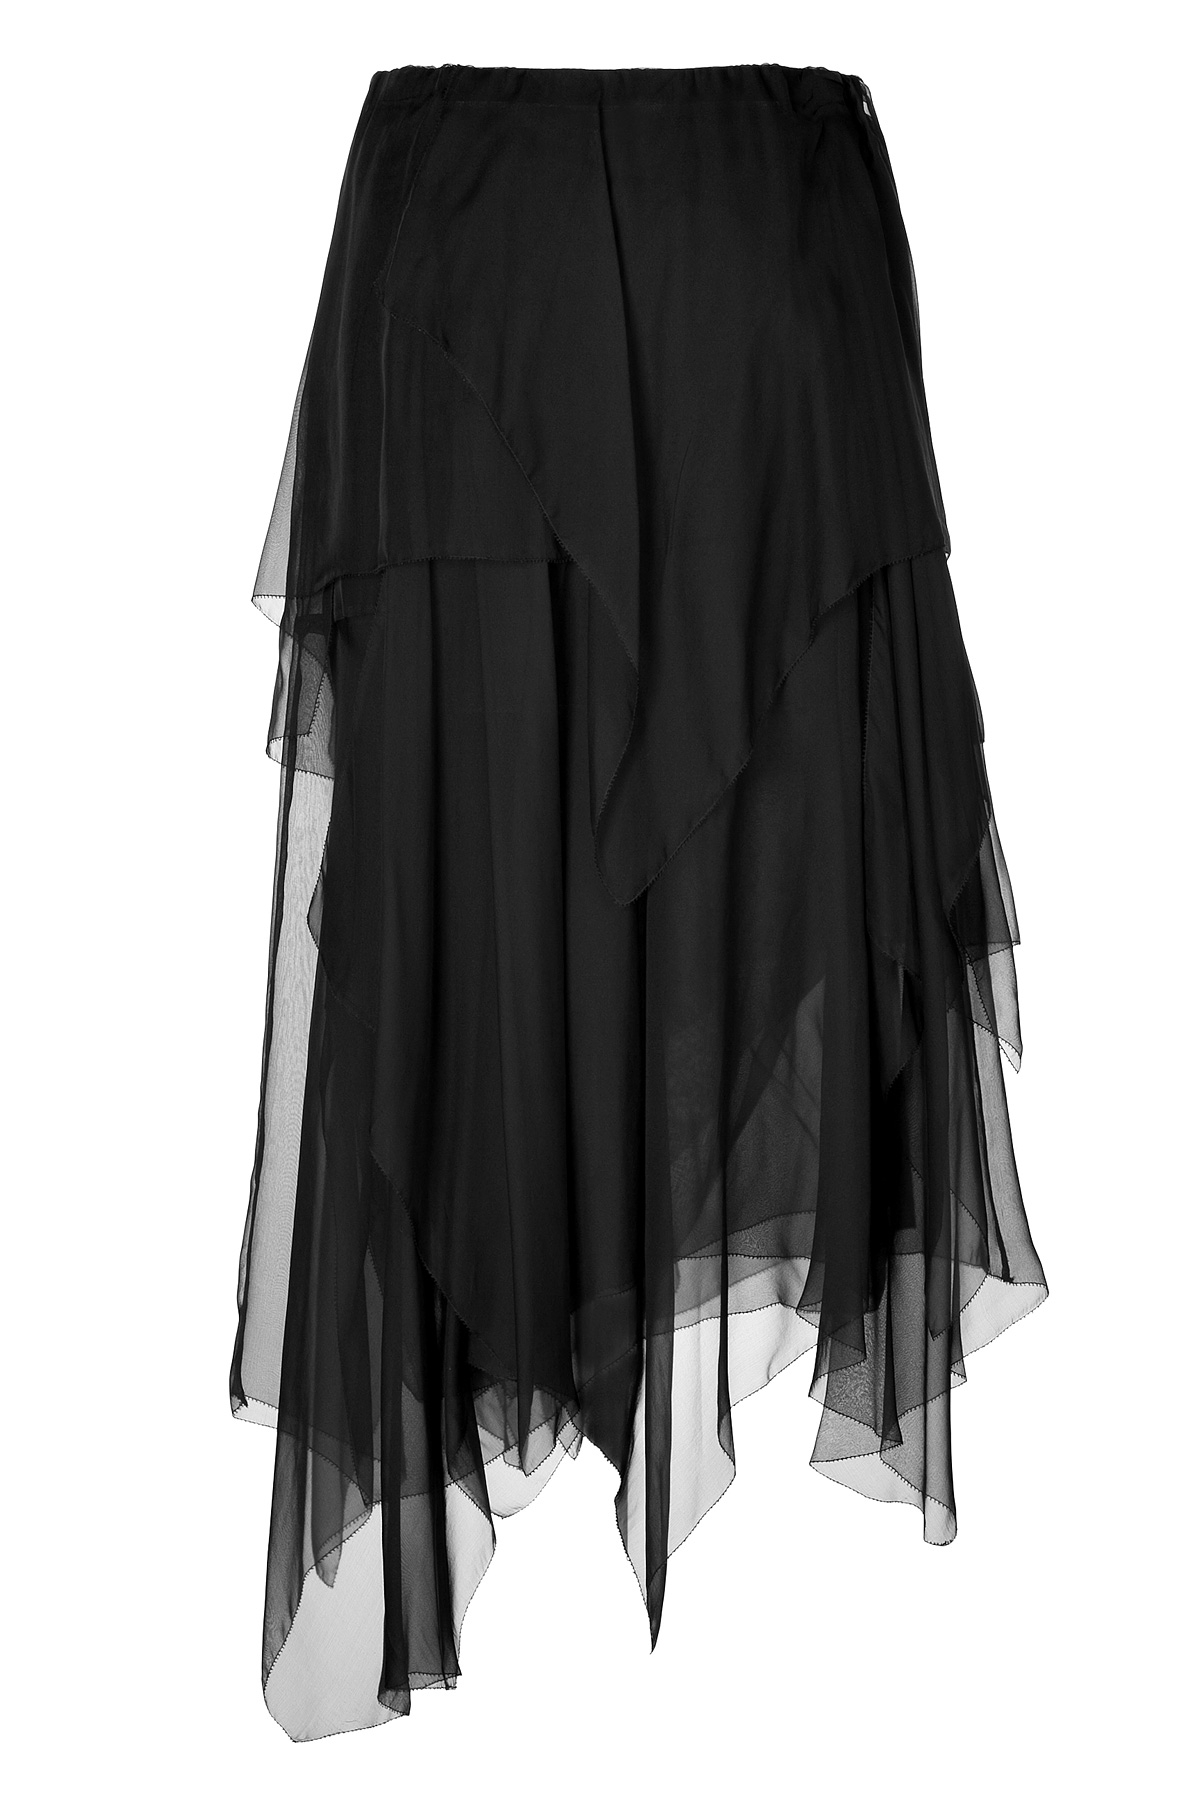 Donna Karan New York Silk Handkerchief Skirt in Black | Lyst